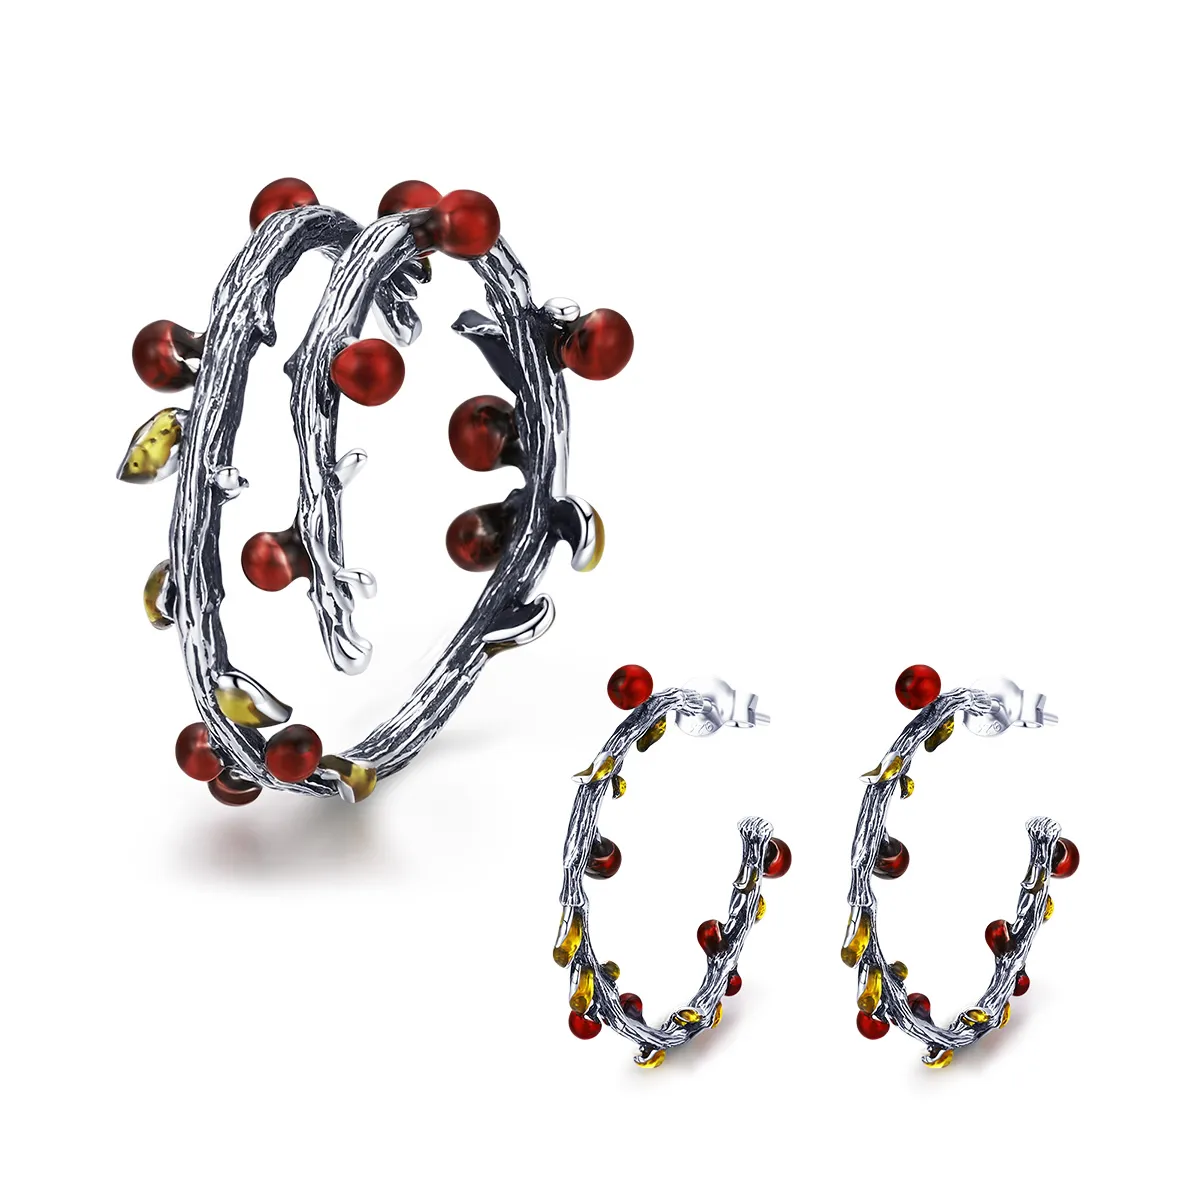 Pandora Style Color of Autumn Jewelry set - SET005